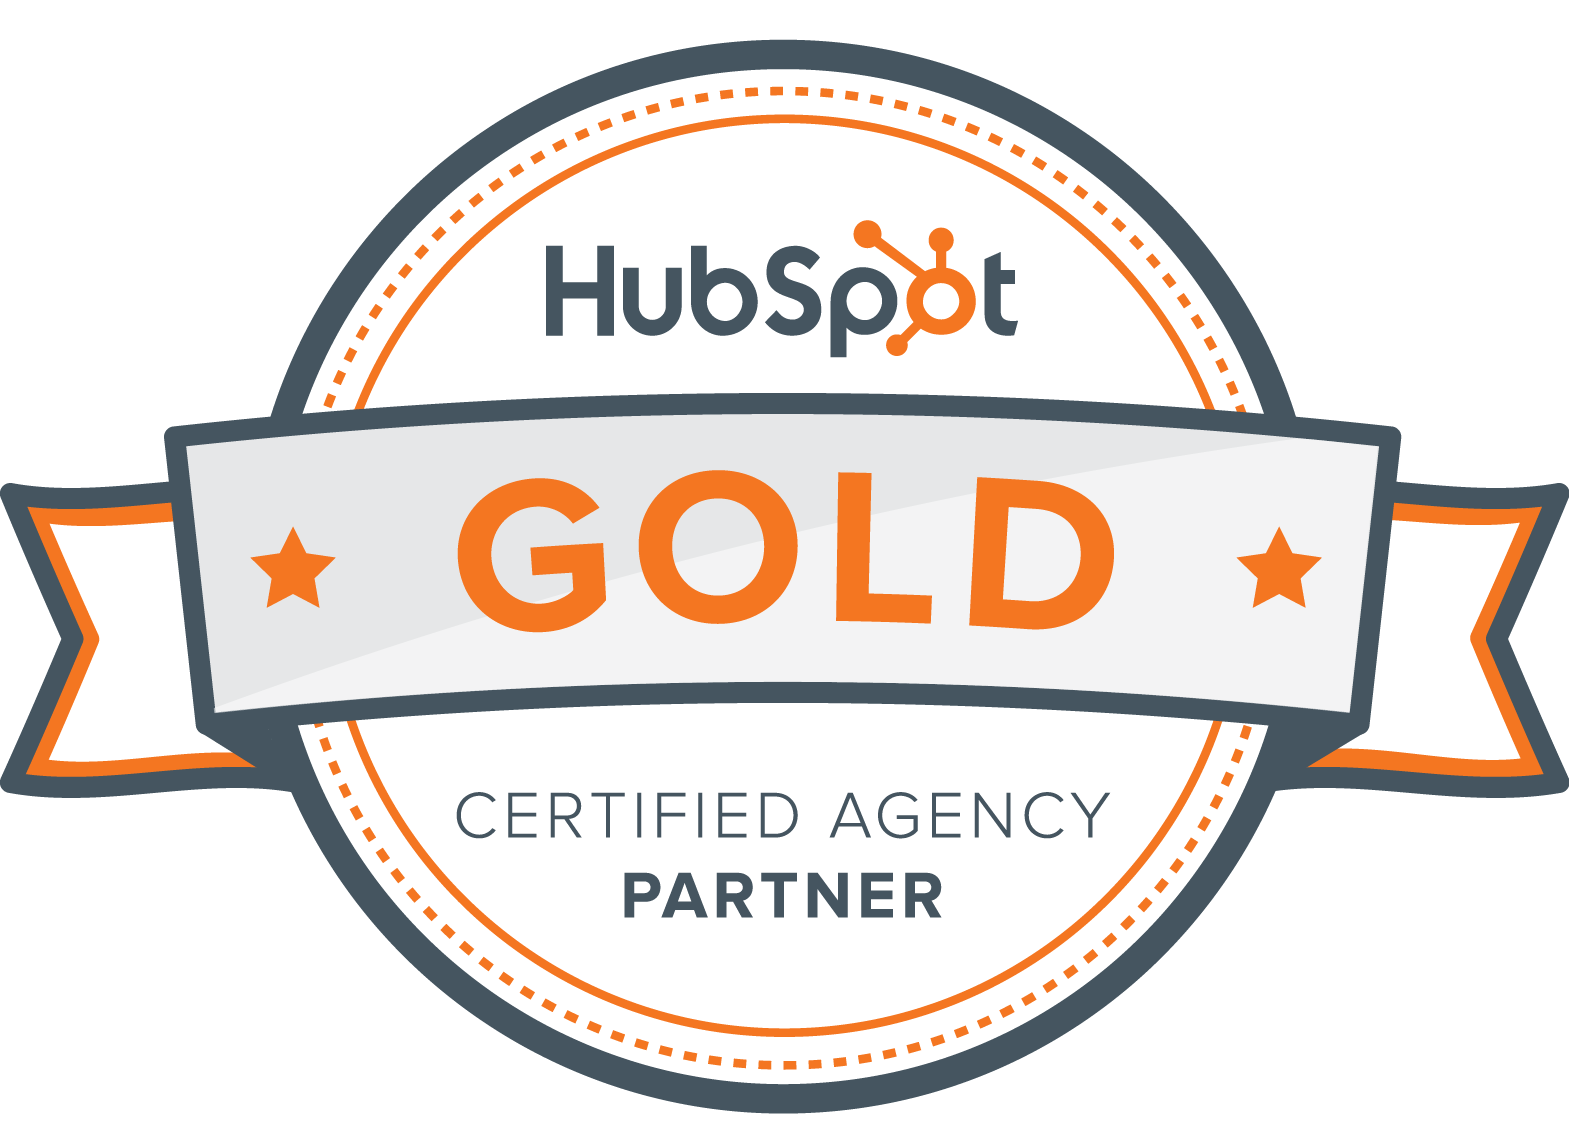 L7 is a Gold Tier HubSpot Certified Agency Partner